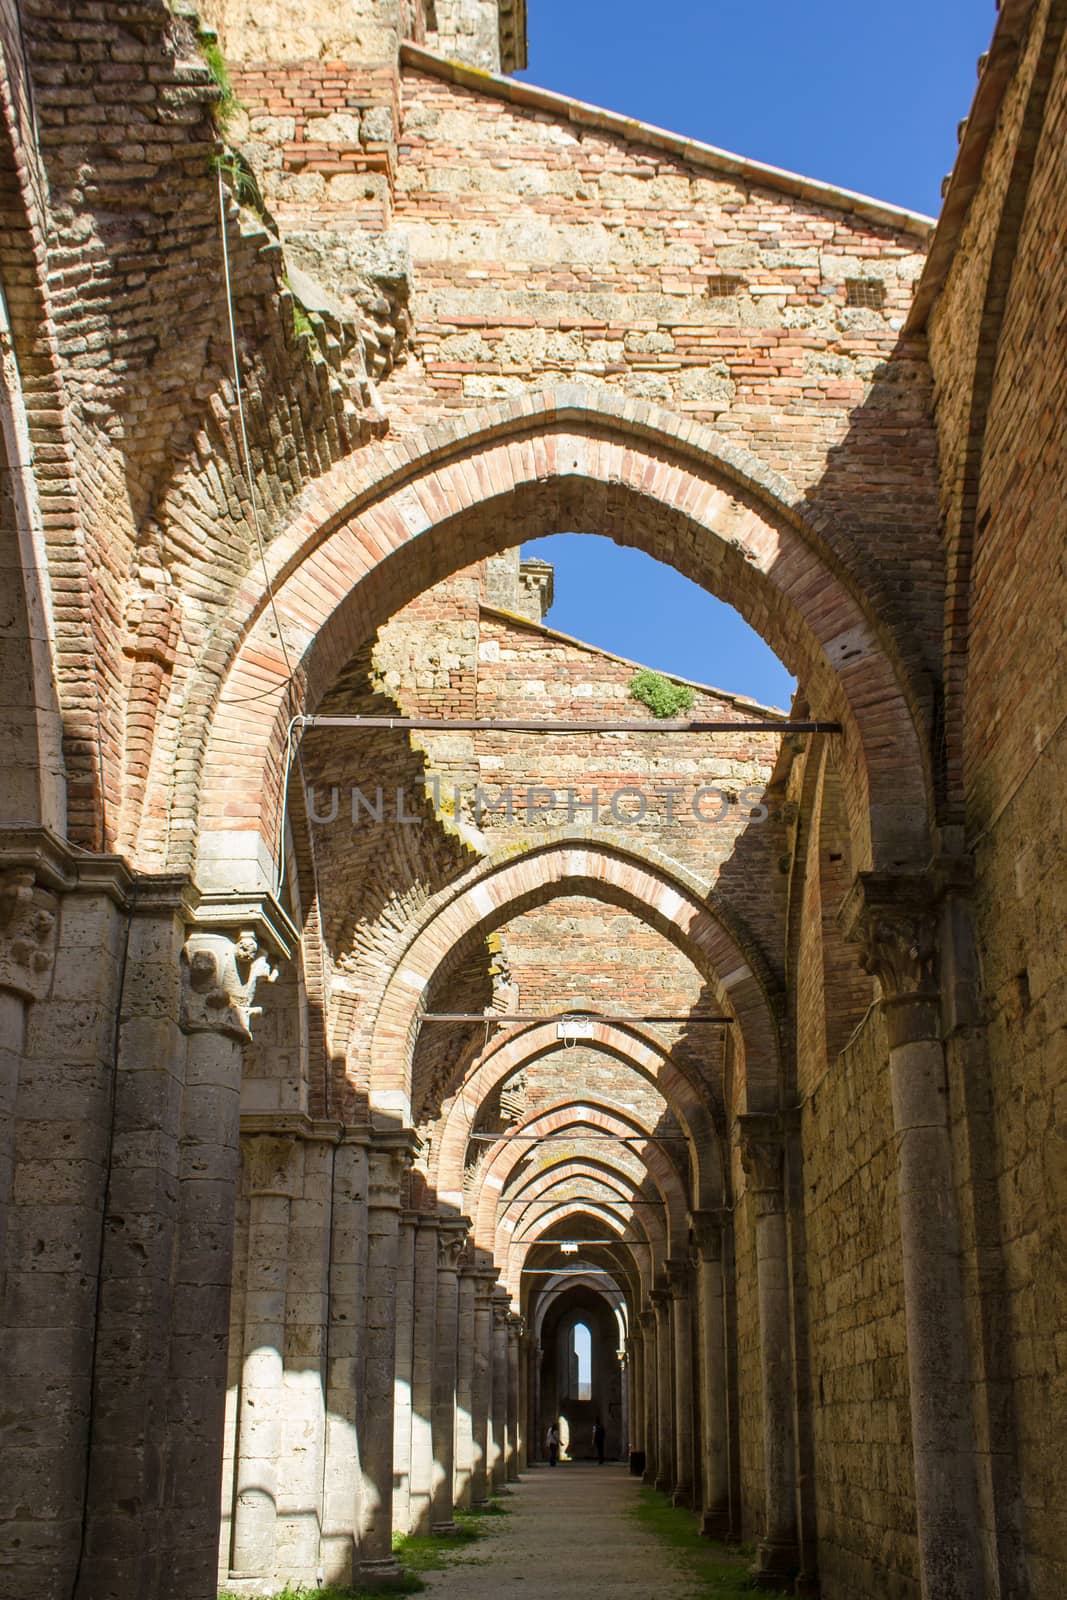 The abbey of San Galgano by goghy73